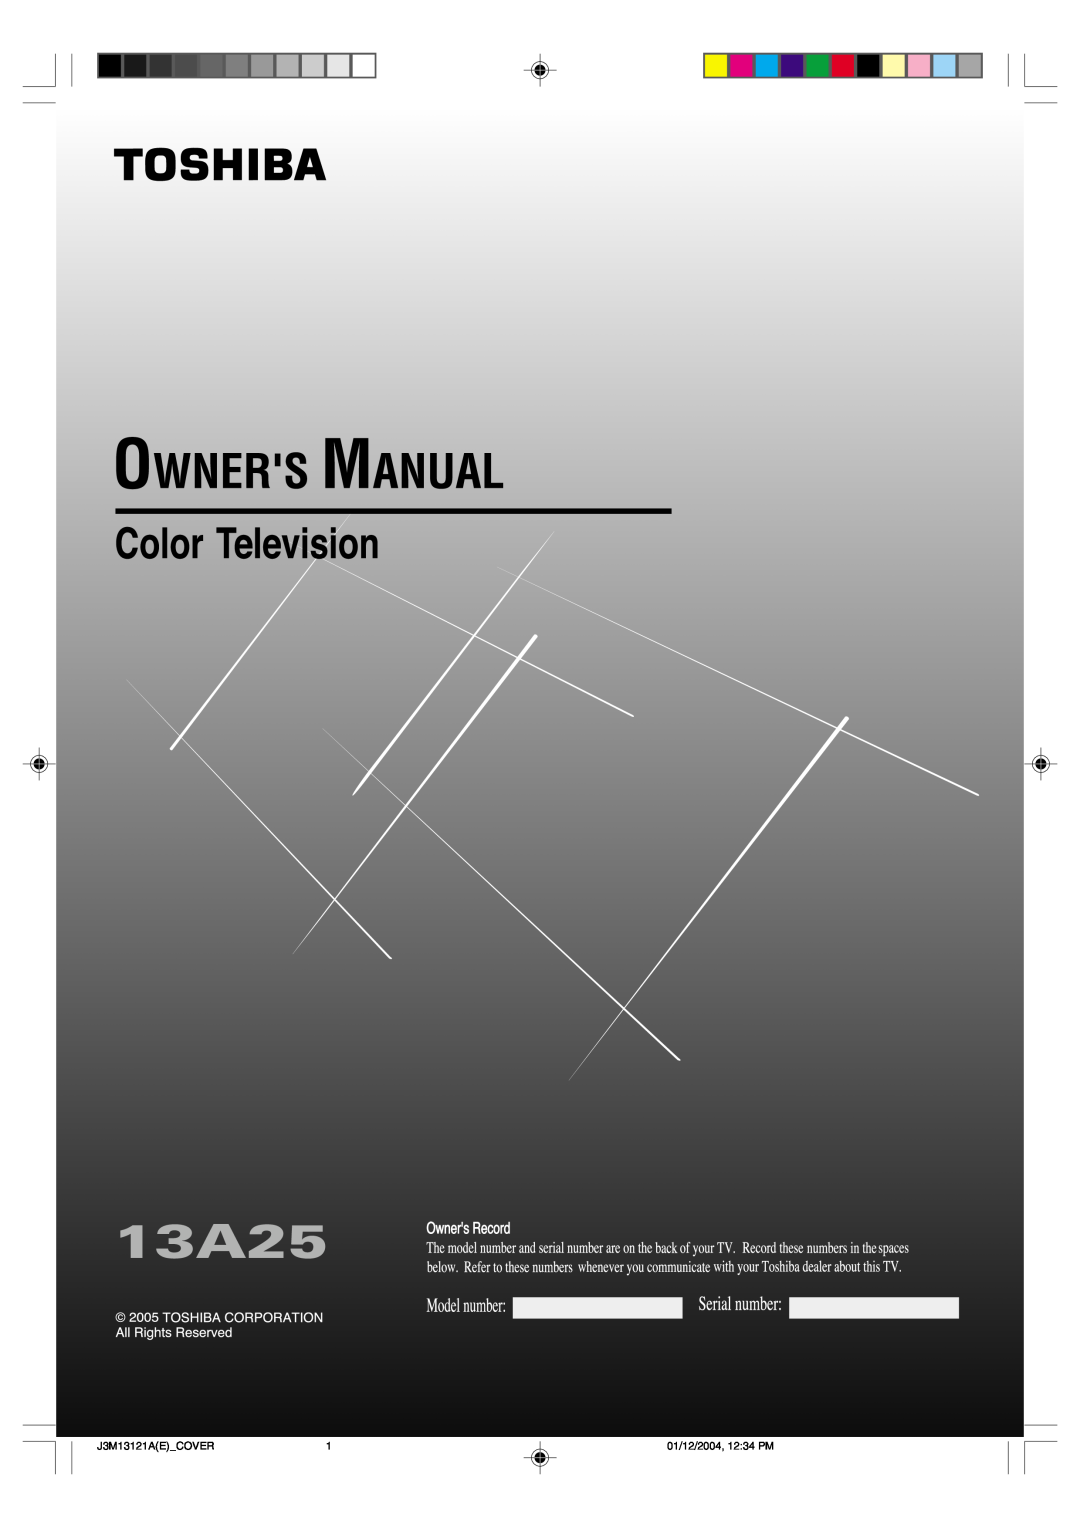 Toshiba 13A25 manual J3M13121AECOVER, 01/12/2004, 1234 PM 